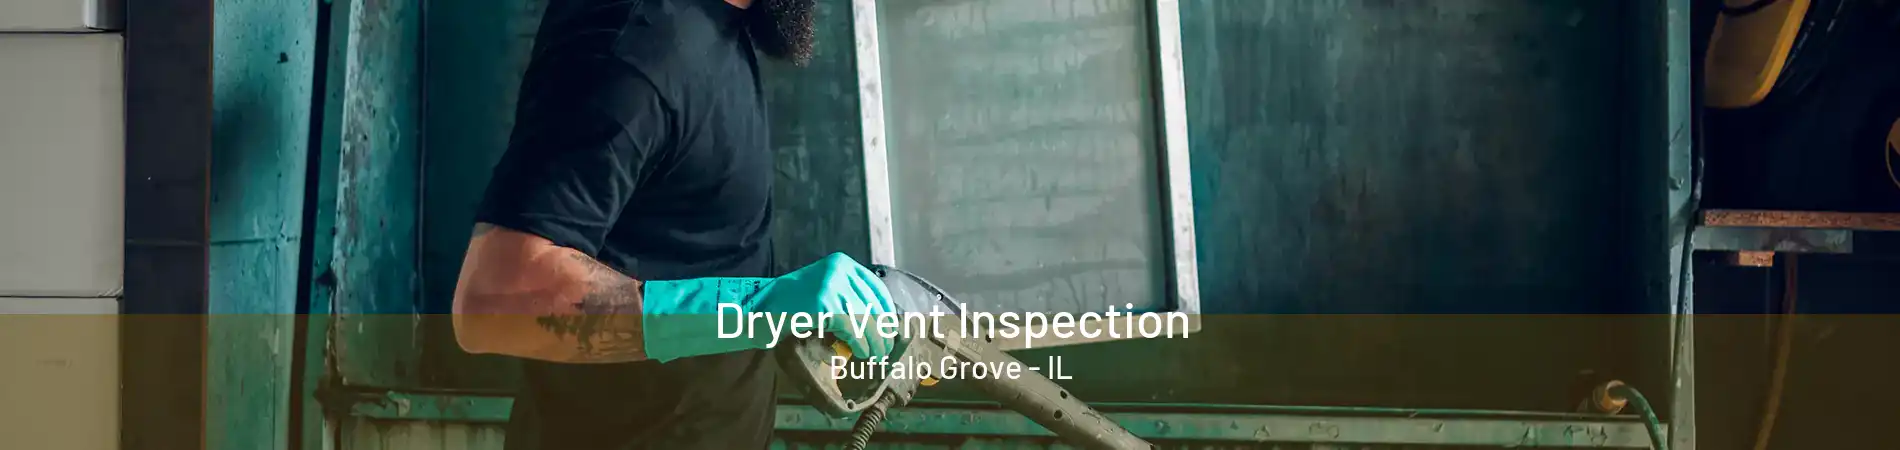 Dryer Vent Inspection Buffalo Grove - IL